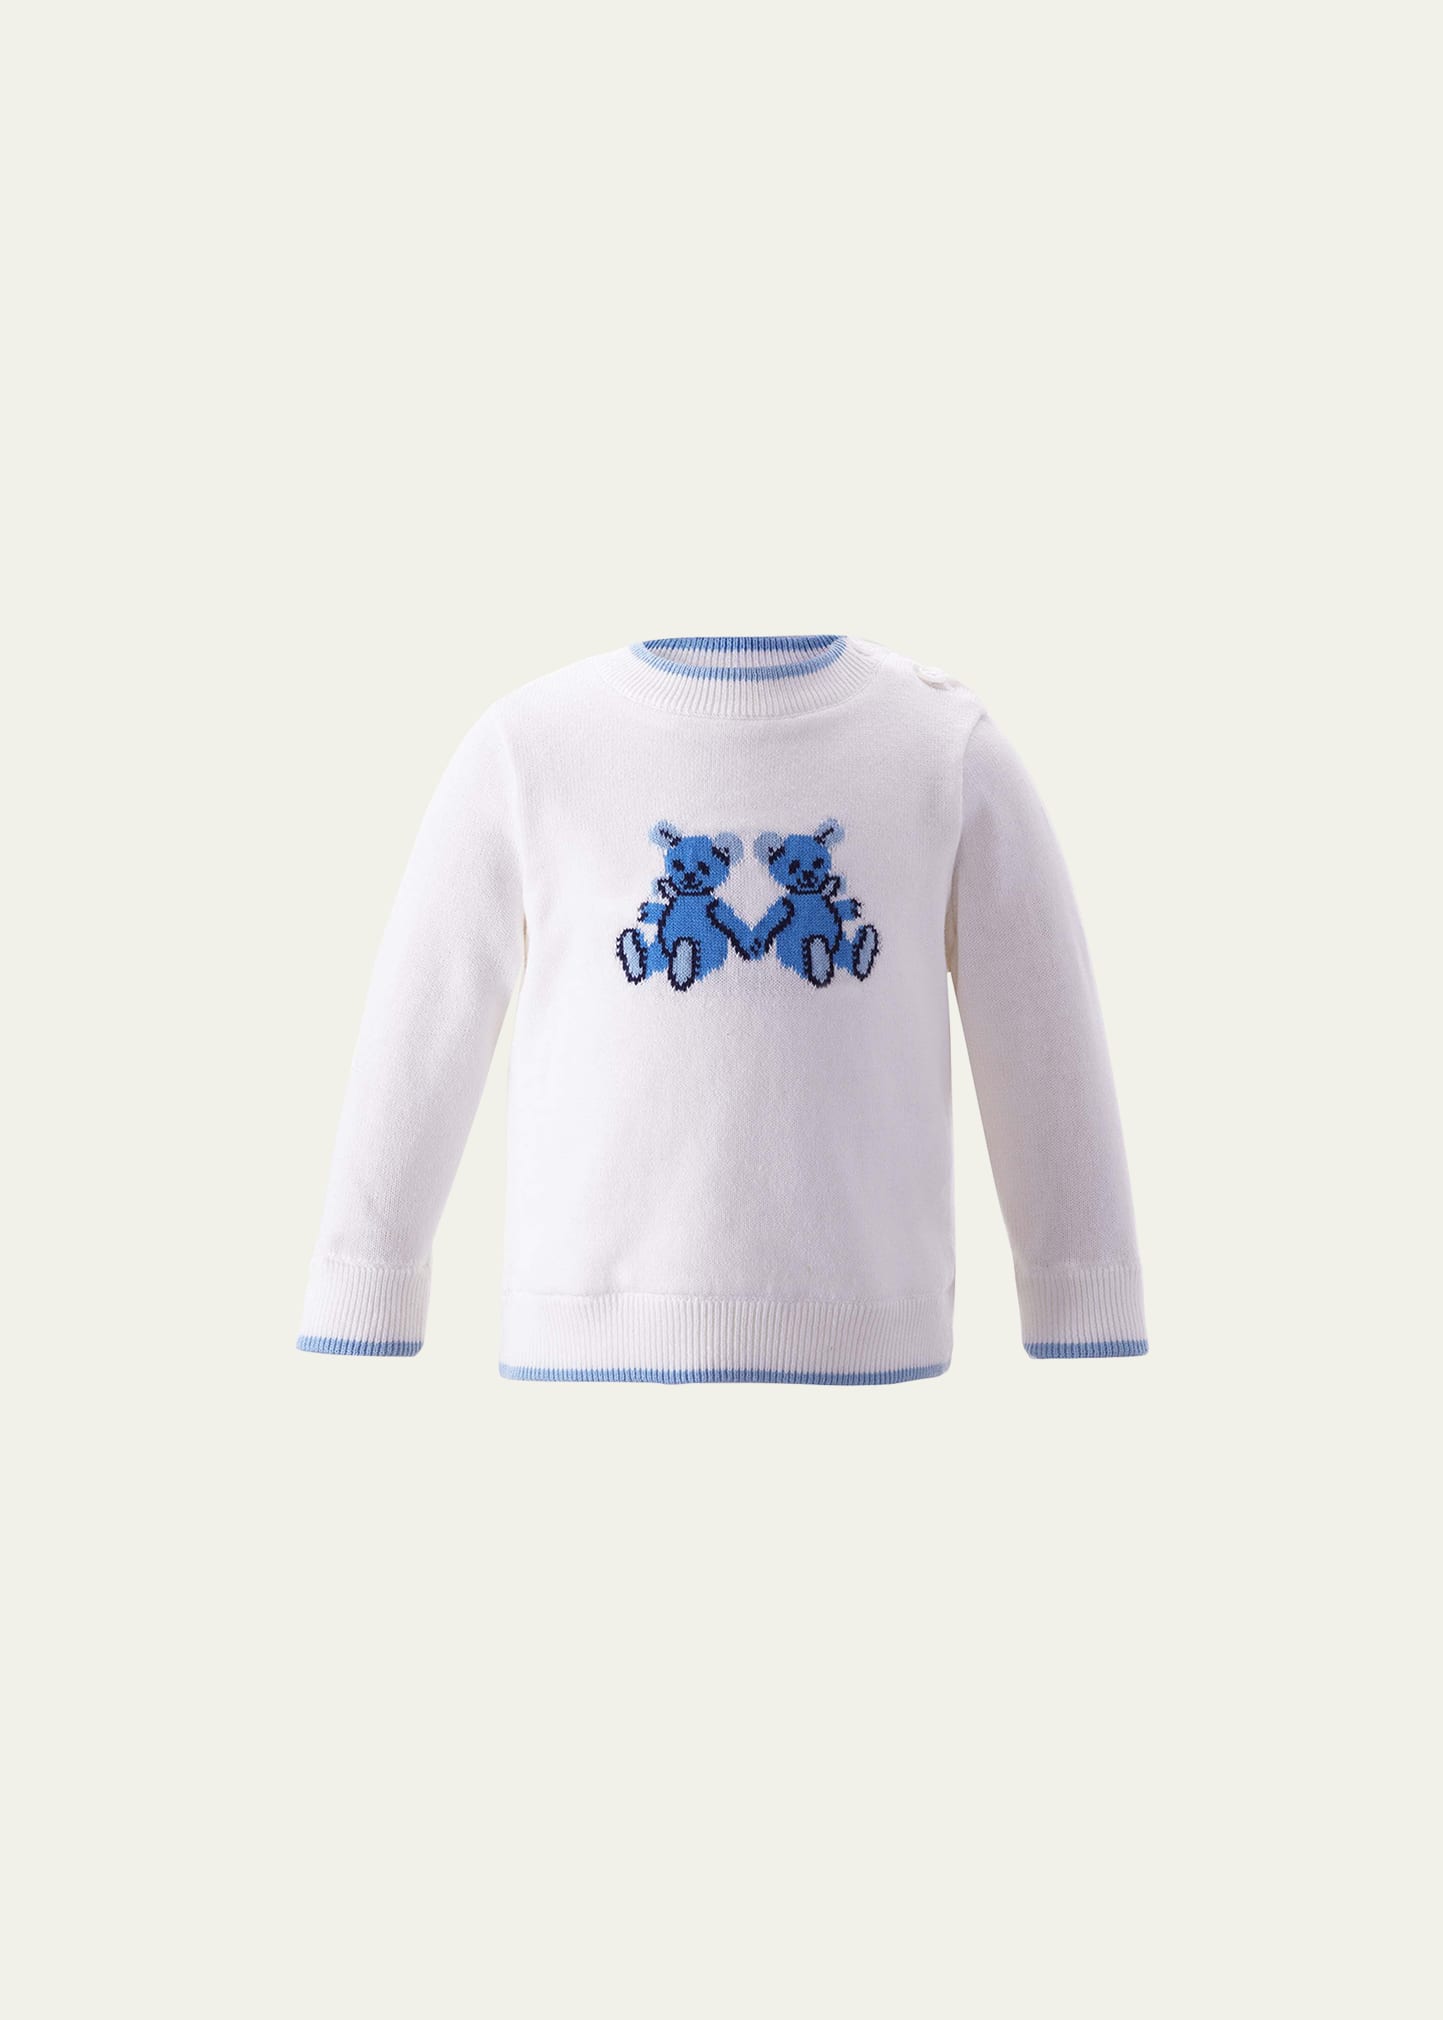 Boy's Teddy Intarsia Sweater, Size 6M-24M